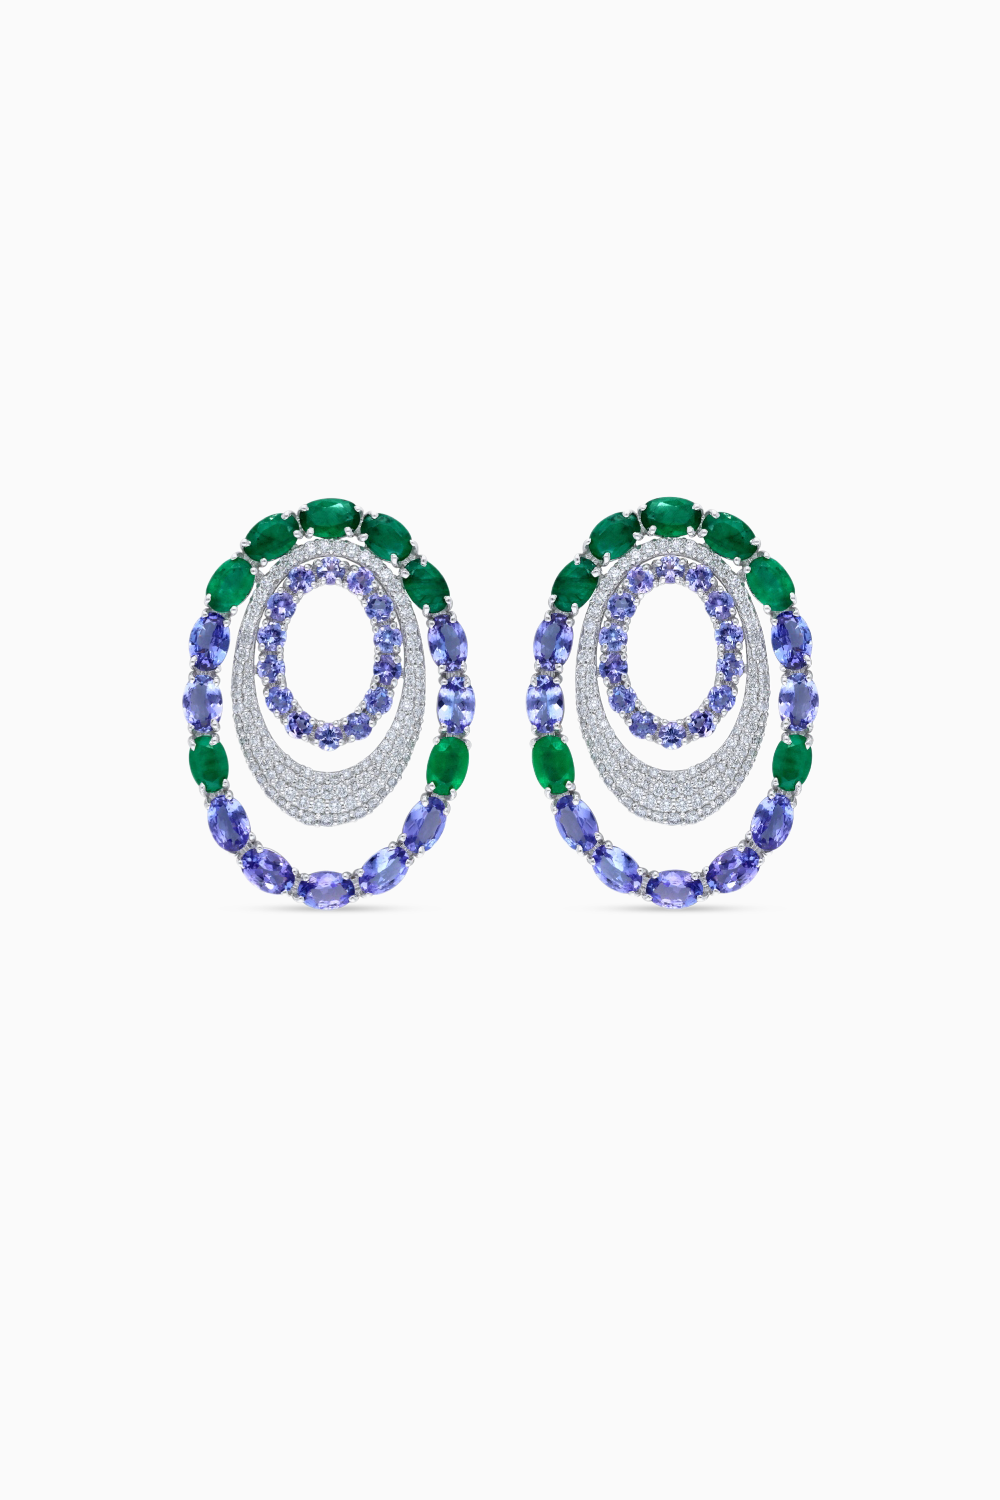 Azure Tanzanite Emerald and Diamond Earrings